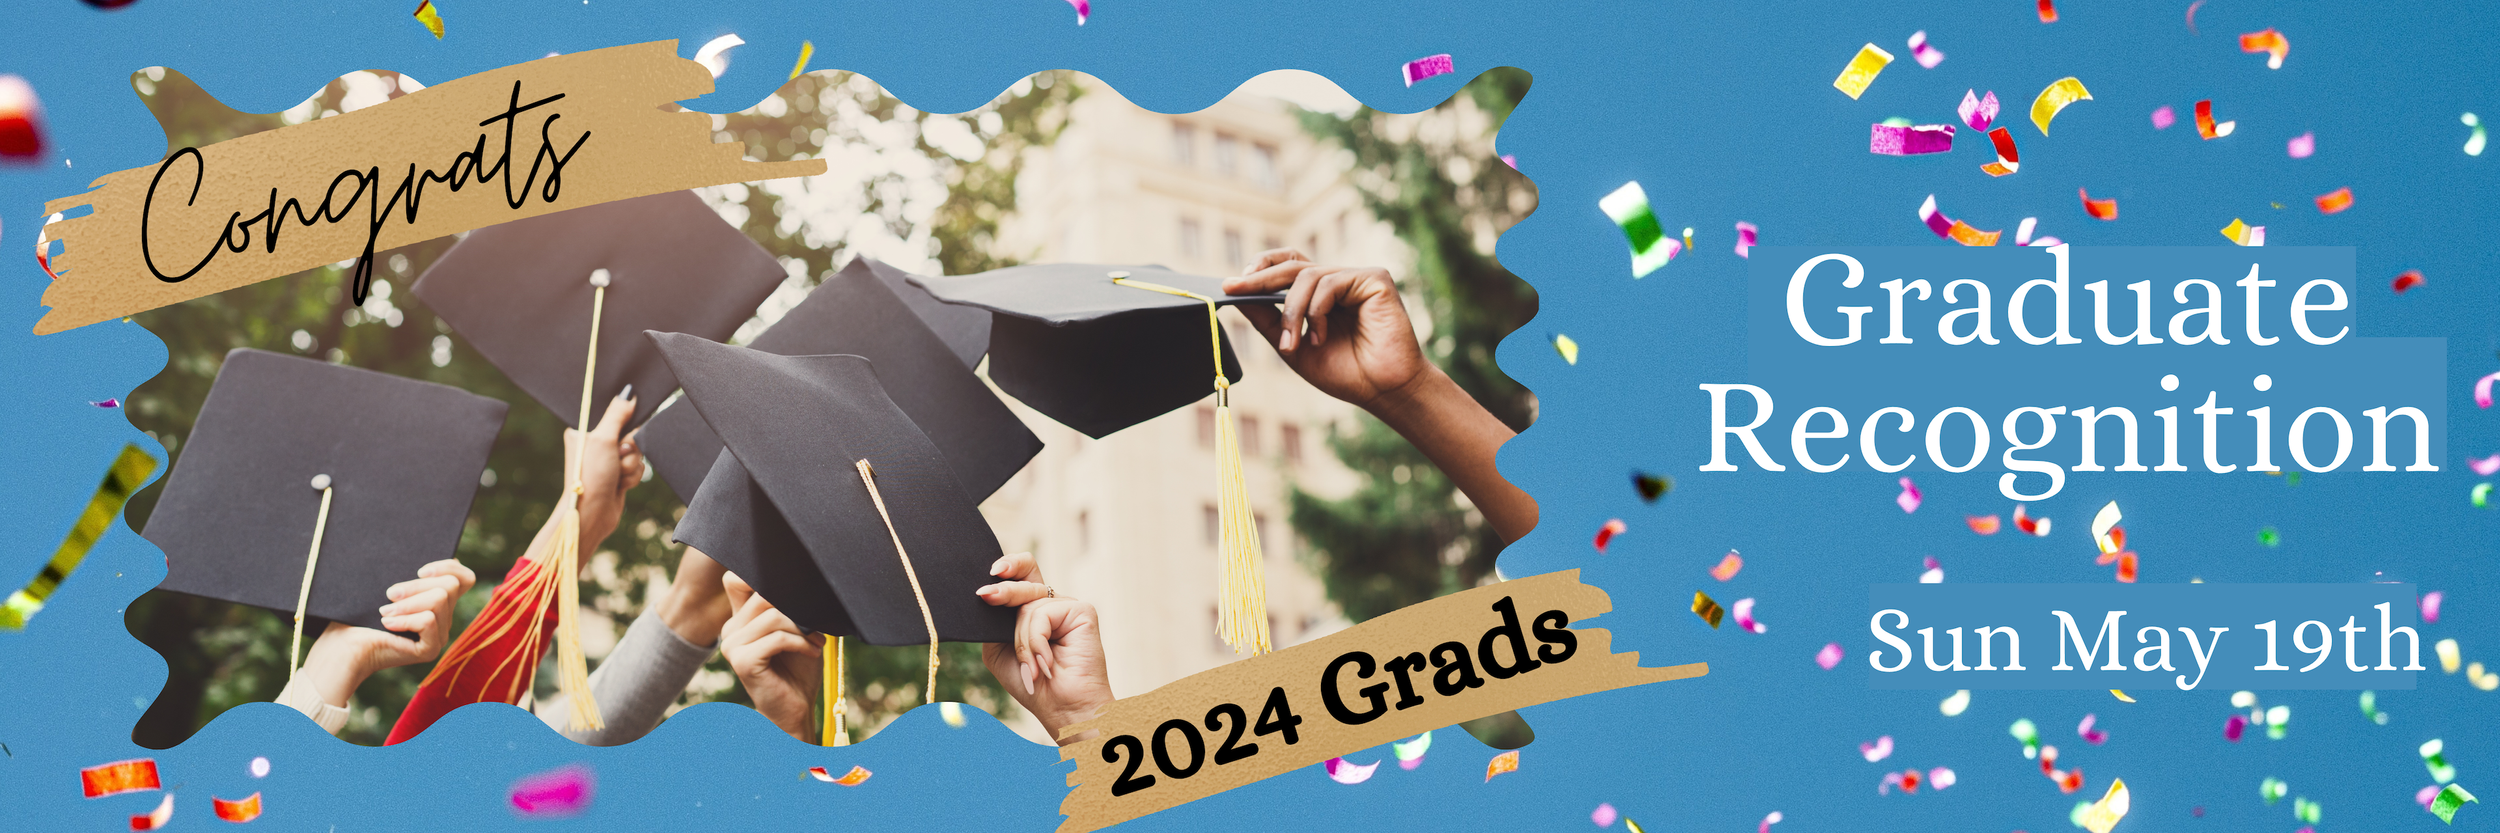 Graduate Recognition 2024-website banner.png